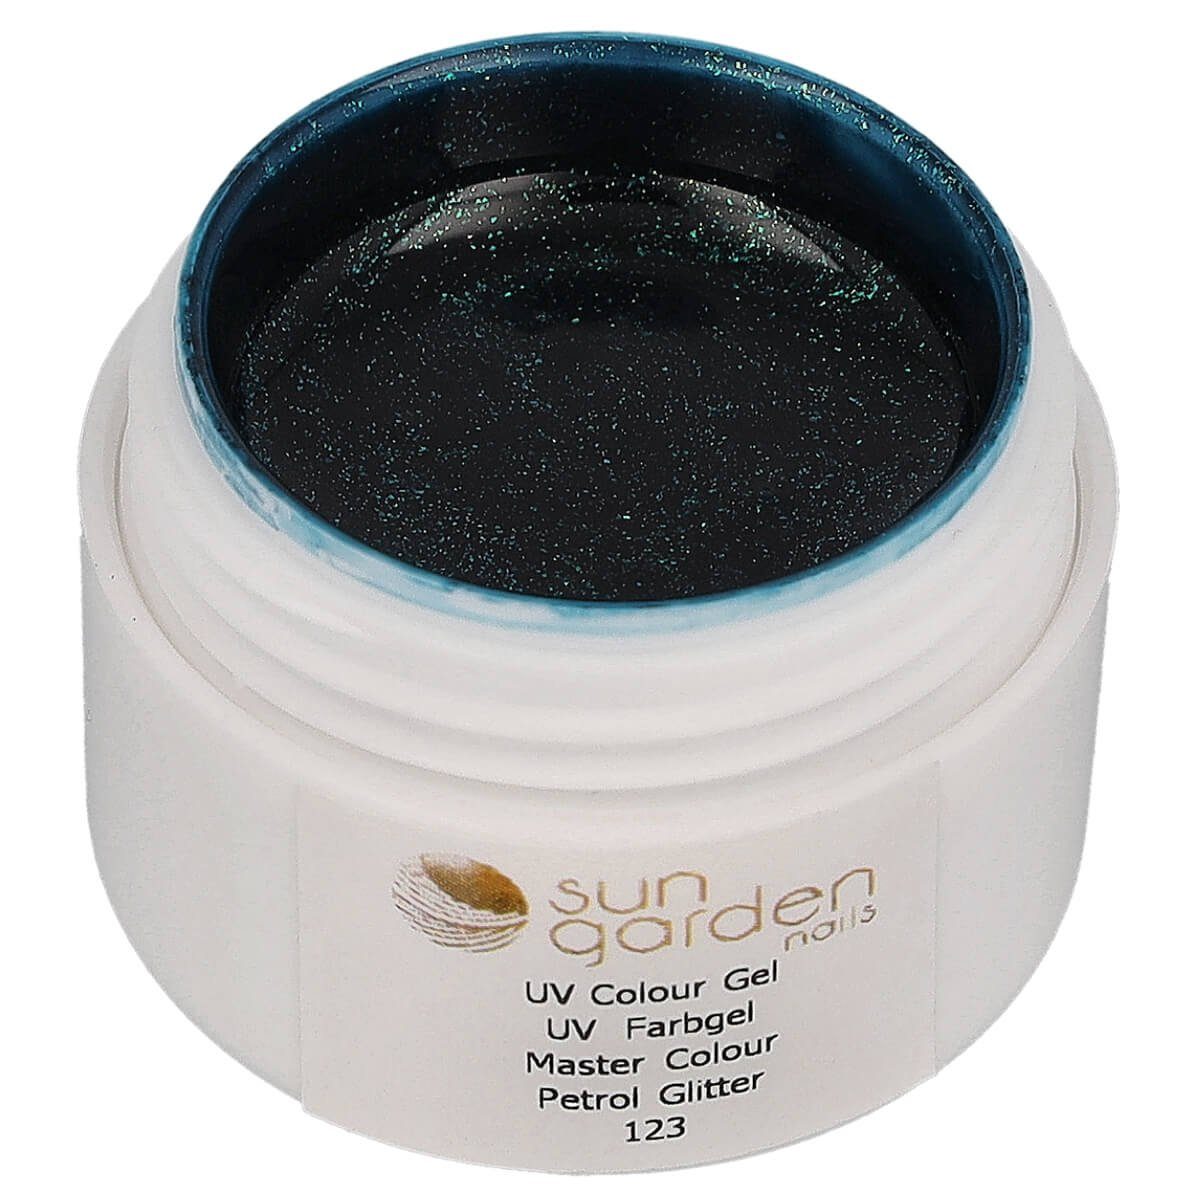 Sun Garden Nails UV-Gel N°123 UV Glitter Master Petrol ml - - 5 Gel Farbgel Color